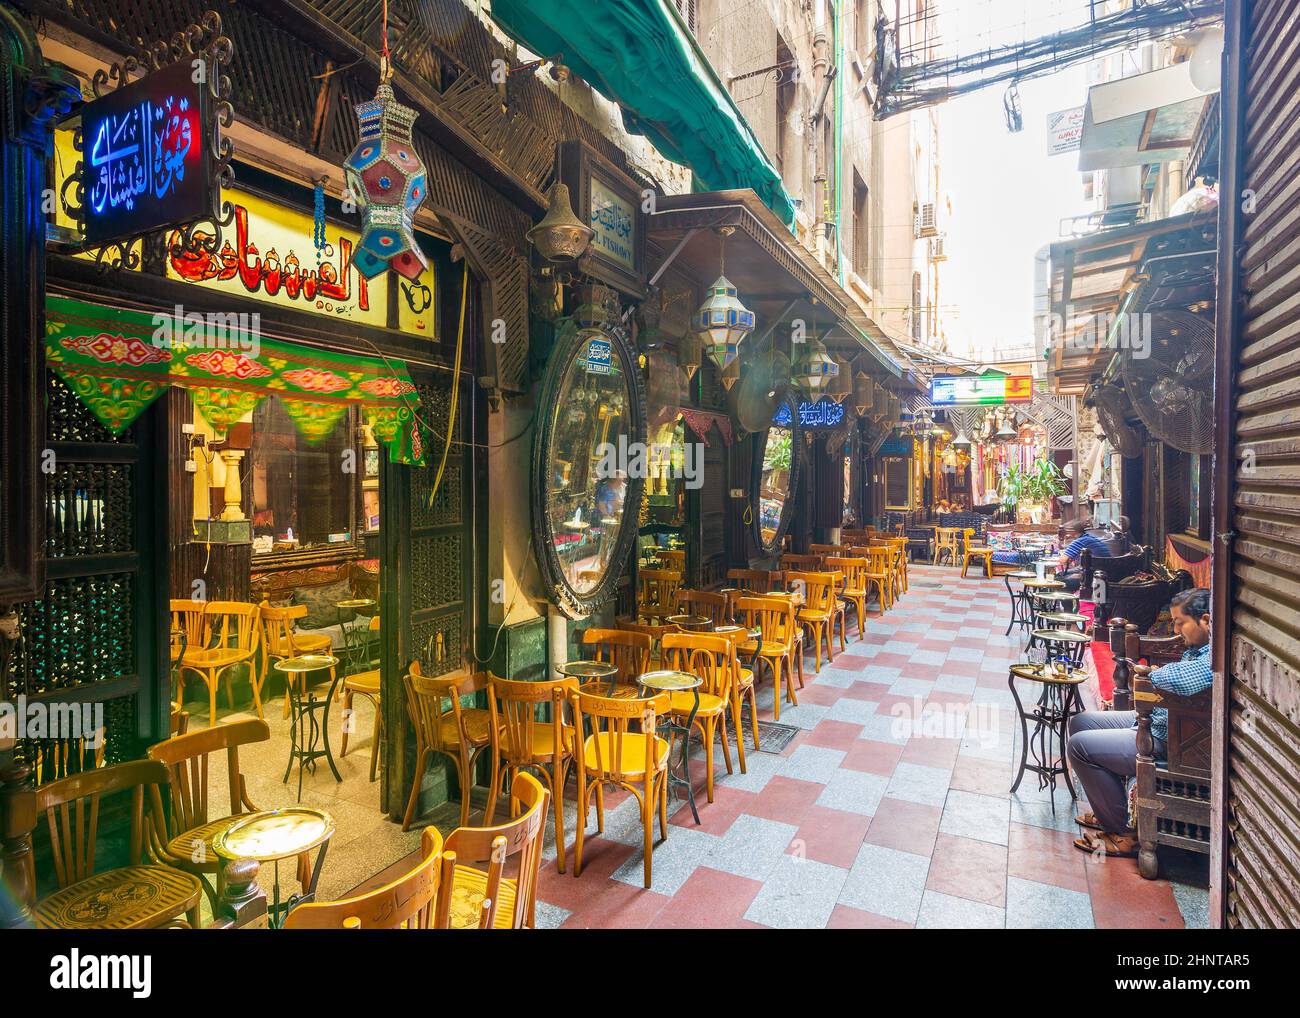 El Fishawi, altes Café, im Mamluk Khan al-Khalili Basar, während der Covid-19-Sperre, Kairo, Ägypten, geschlossen Stockfoto